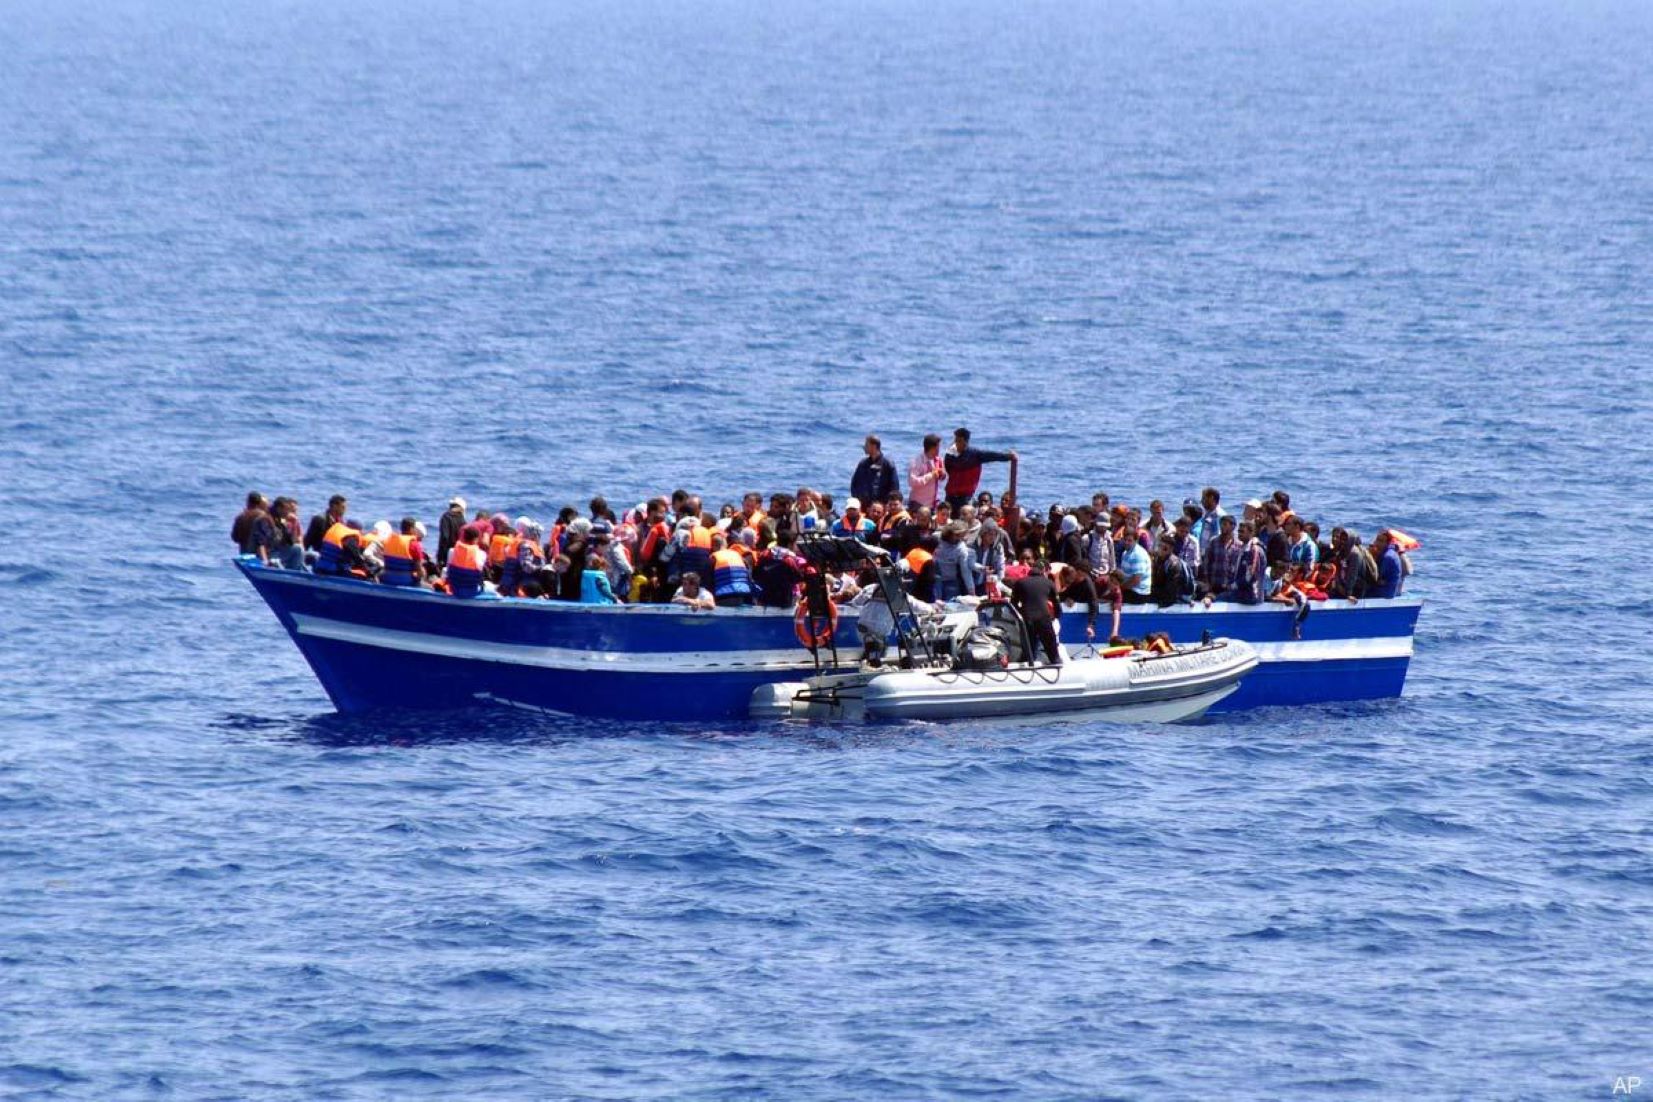 74 Undocumented Migrants Intercepted Off Tunisian Coast